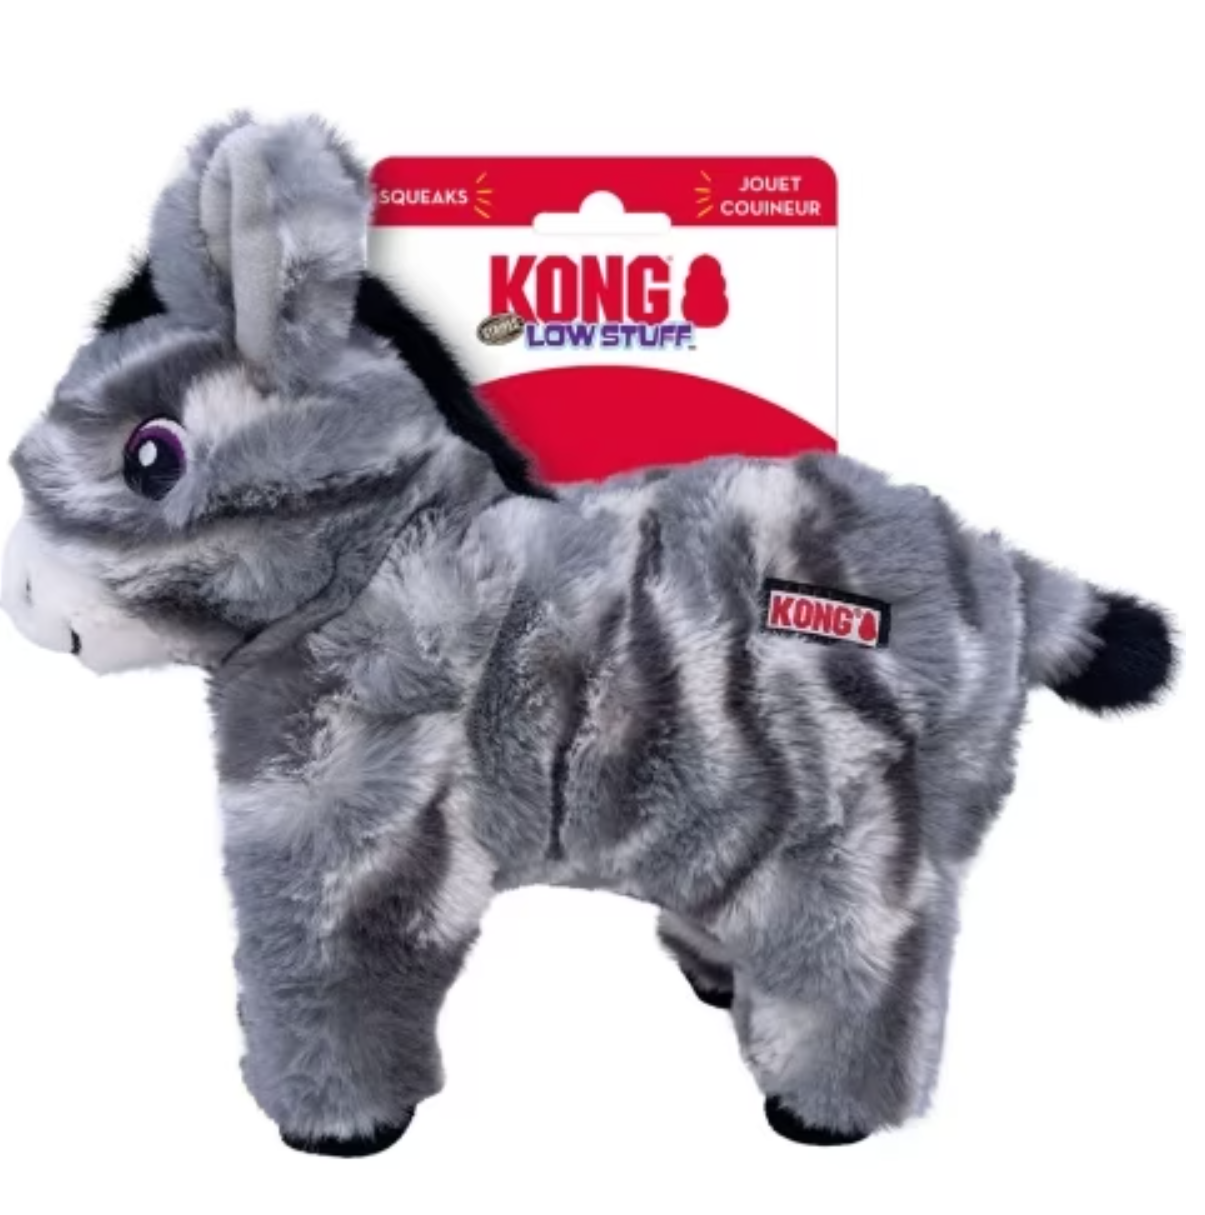 Kong Low Stuff Stripes Dog Toy - Donkey